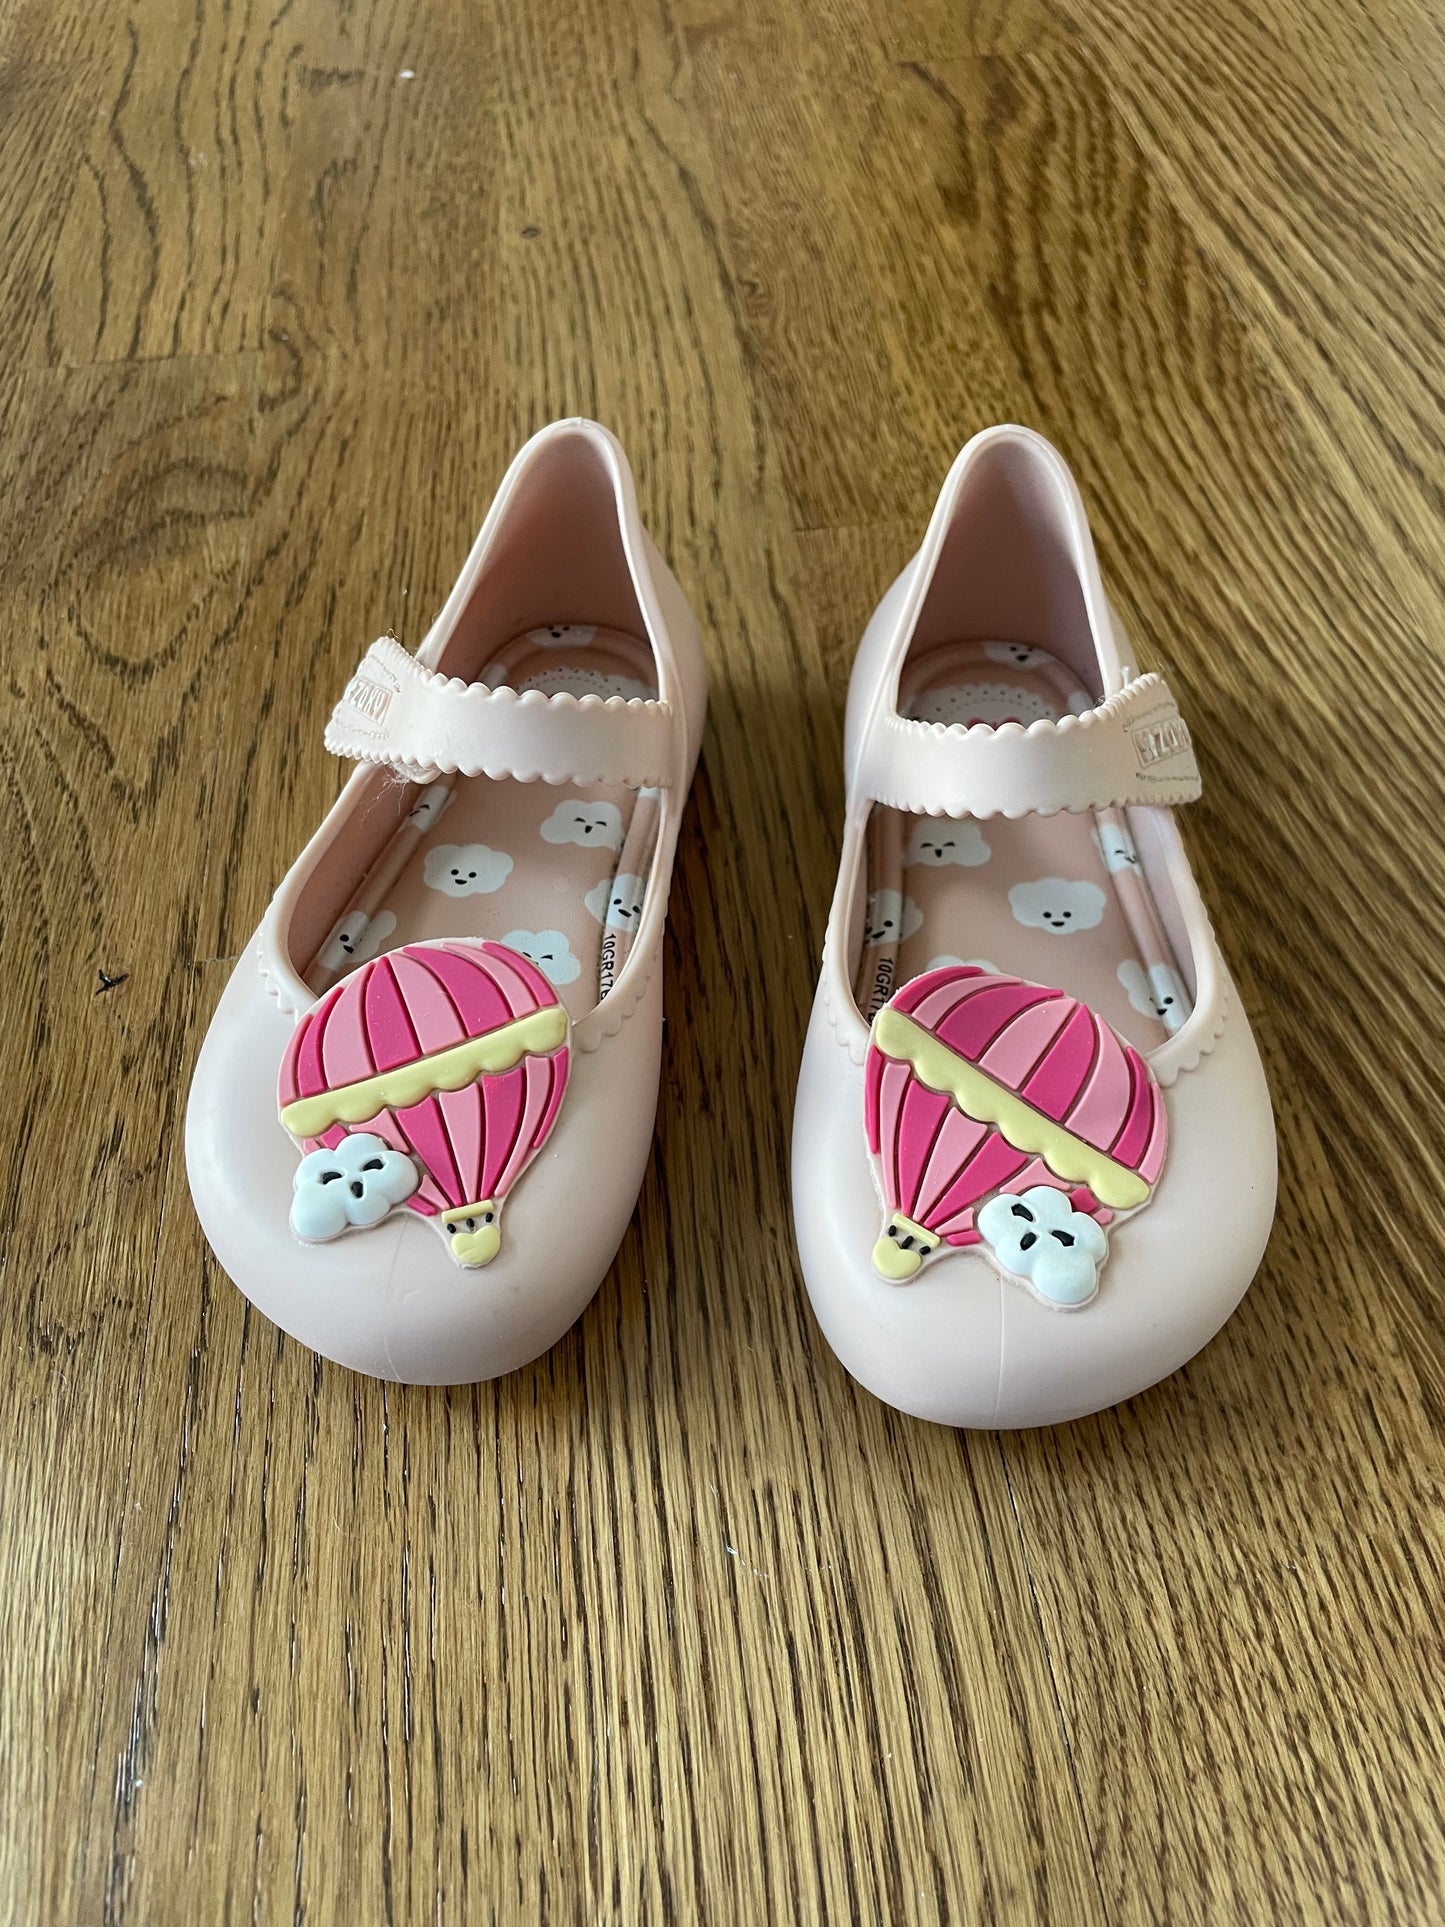 Zaxy Girls Light Pink/Hot Air Balloon Mary Jane Jelly Shoe Size 8T